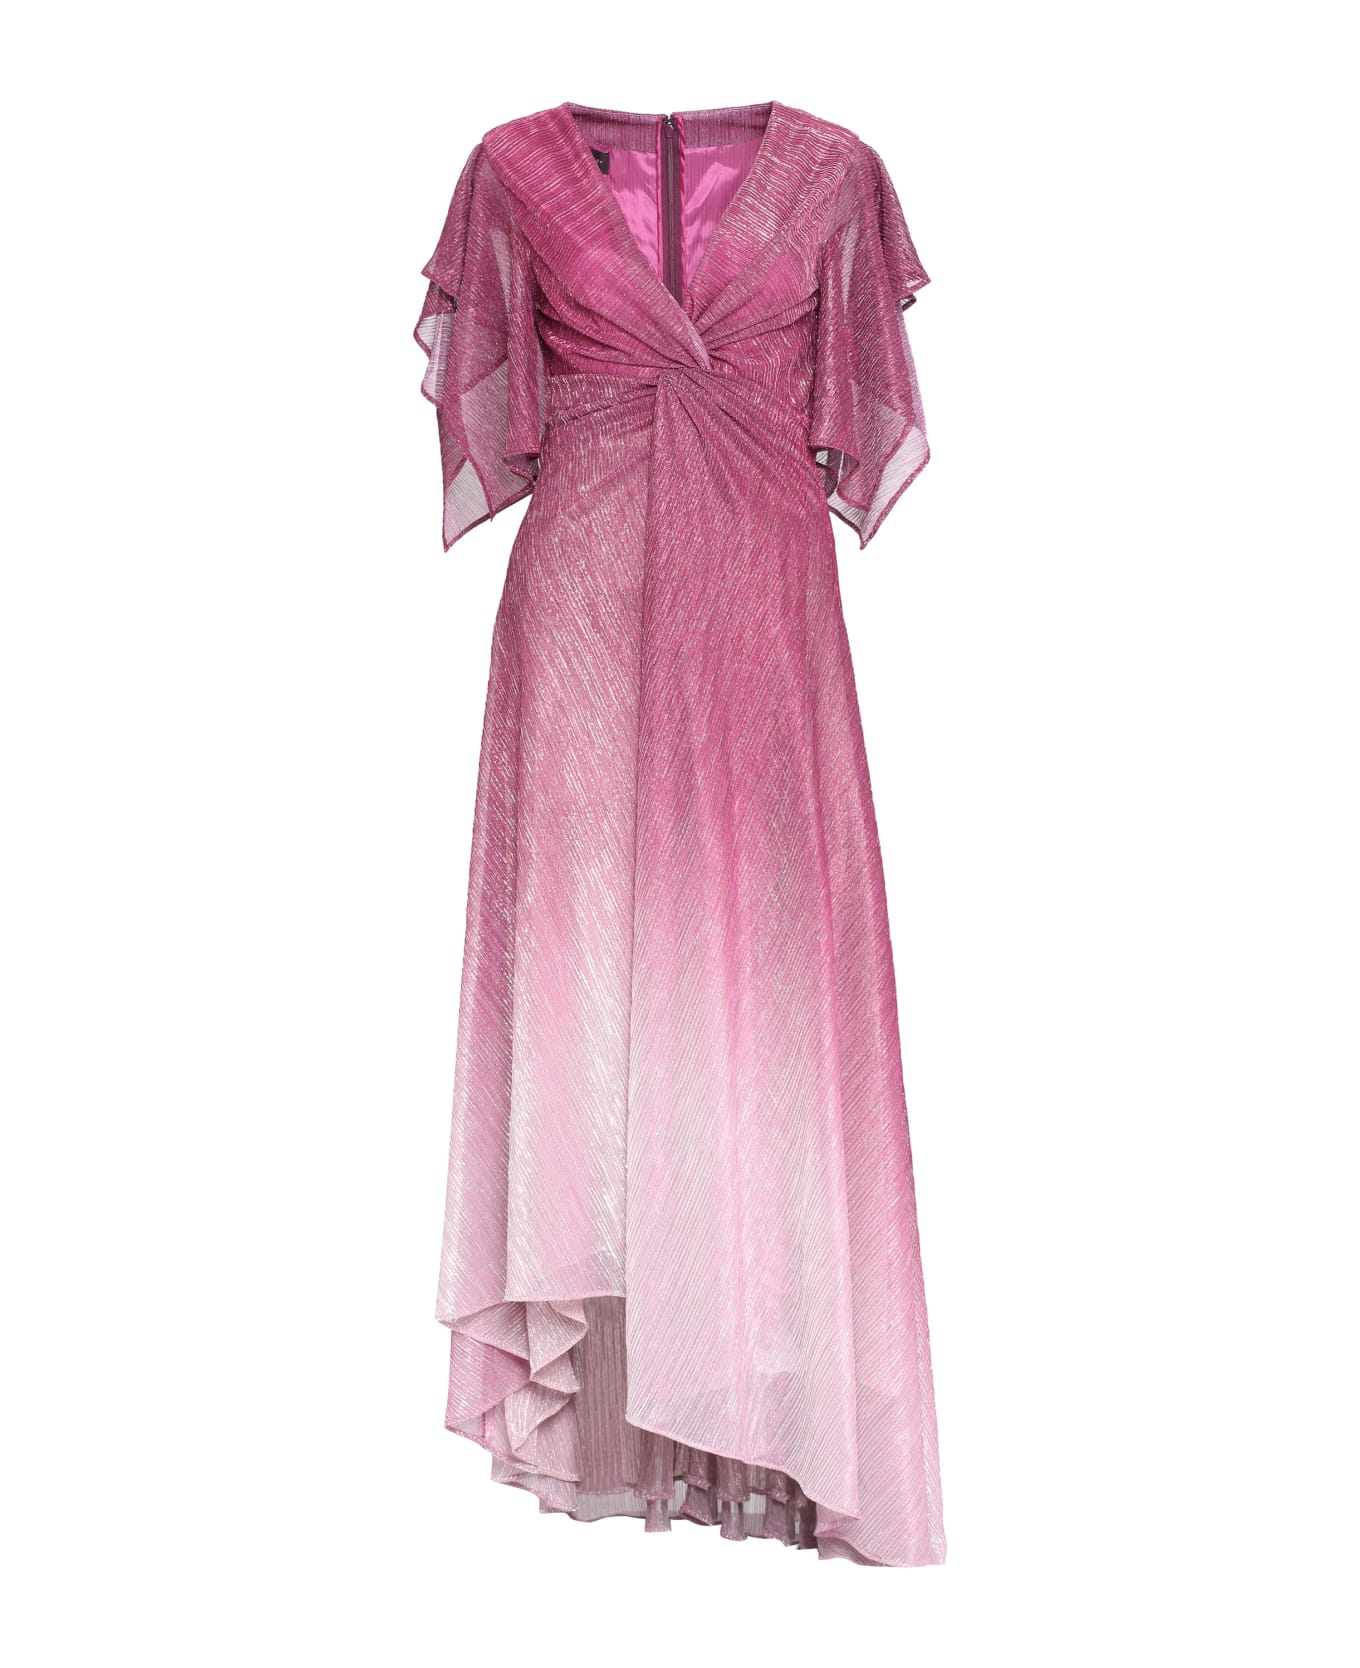 Talbot Runhof Lurex Draped Dress - Red-purple or grape